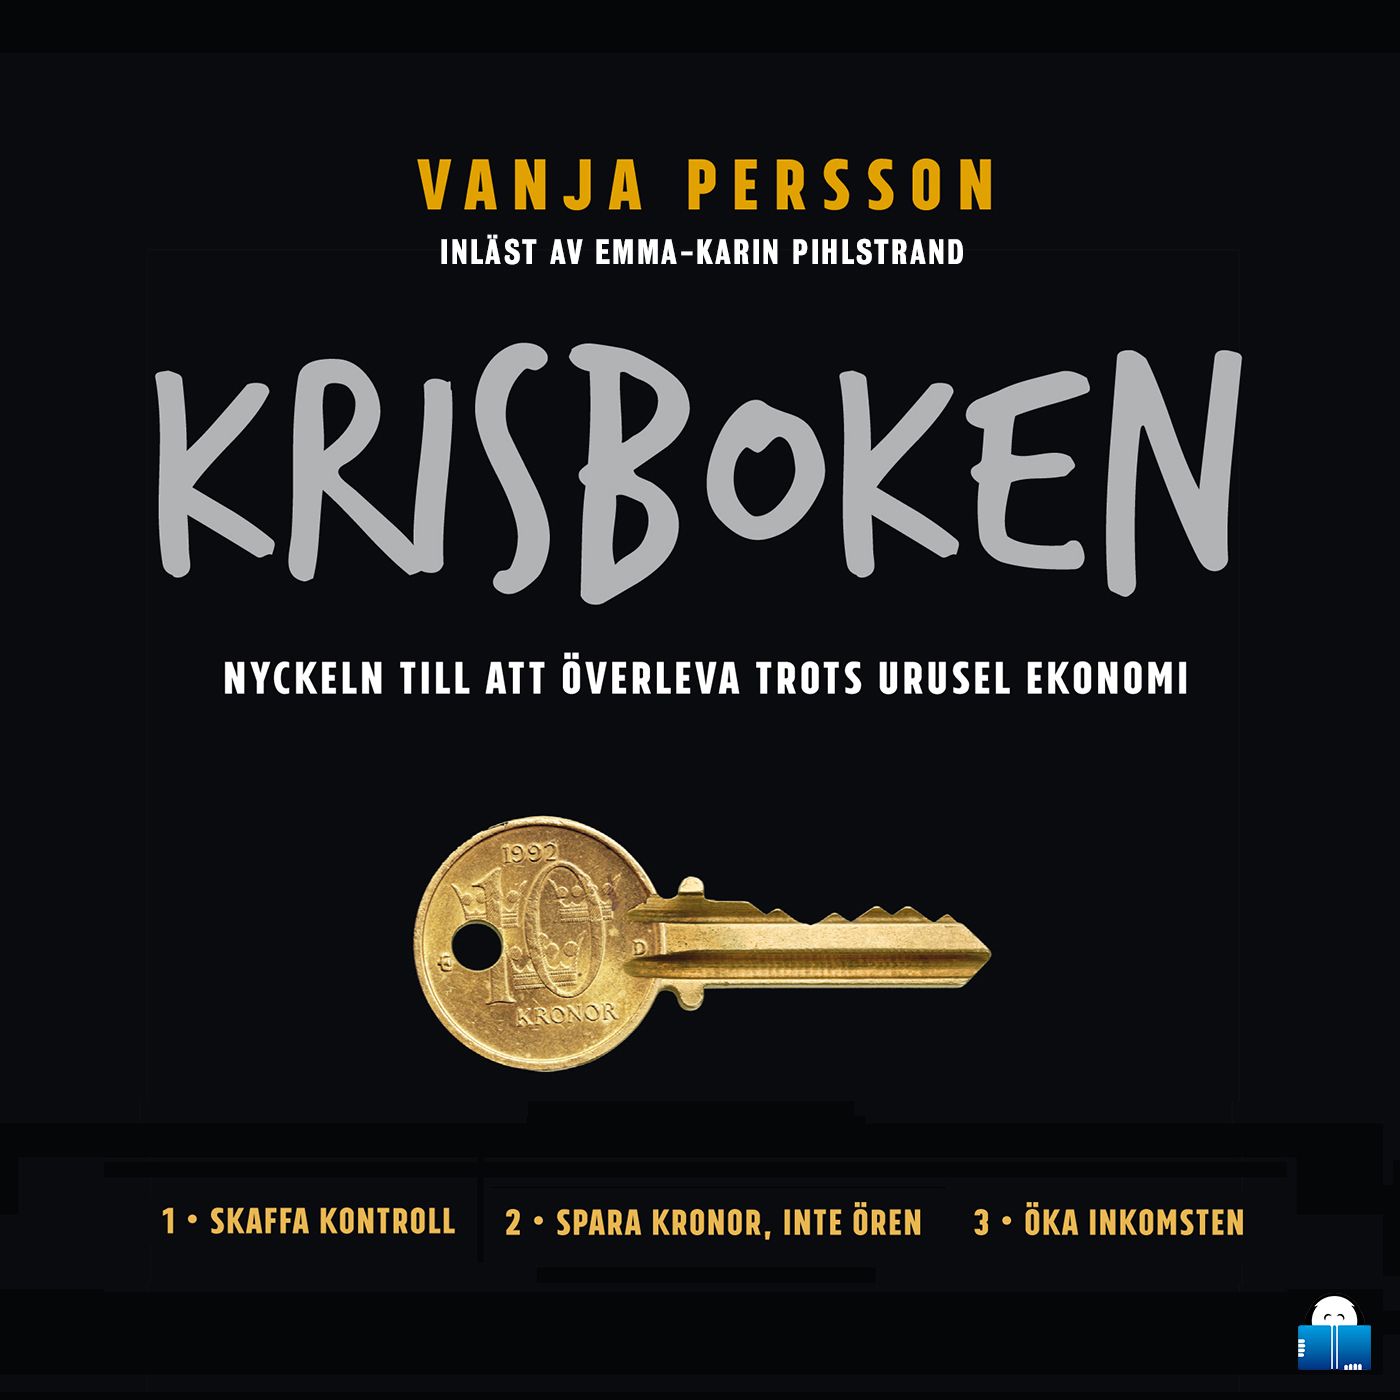 Krisboken, audiobook by Vanja Persson